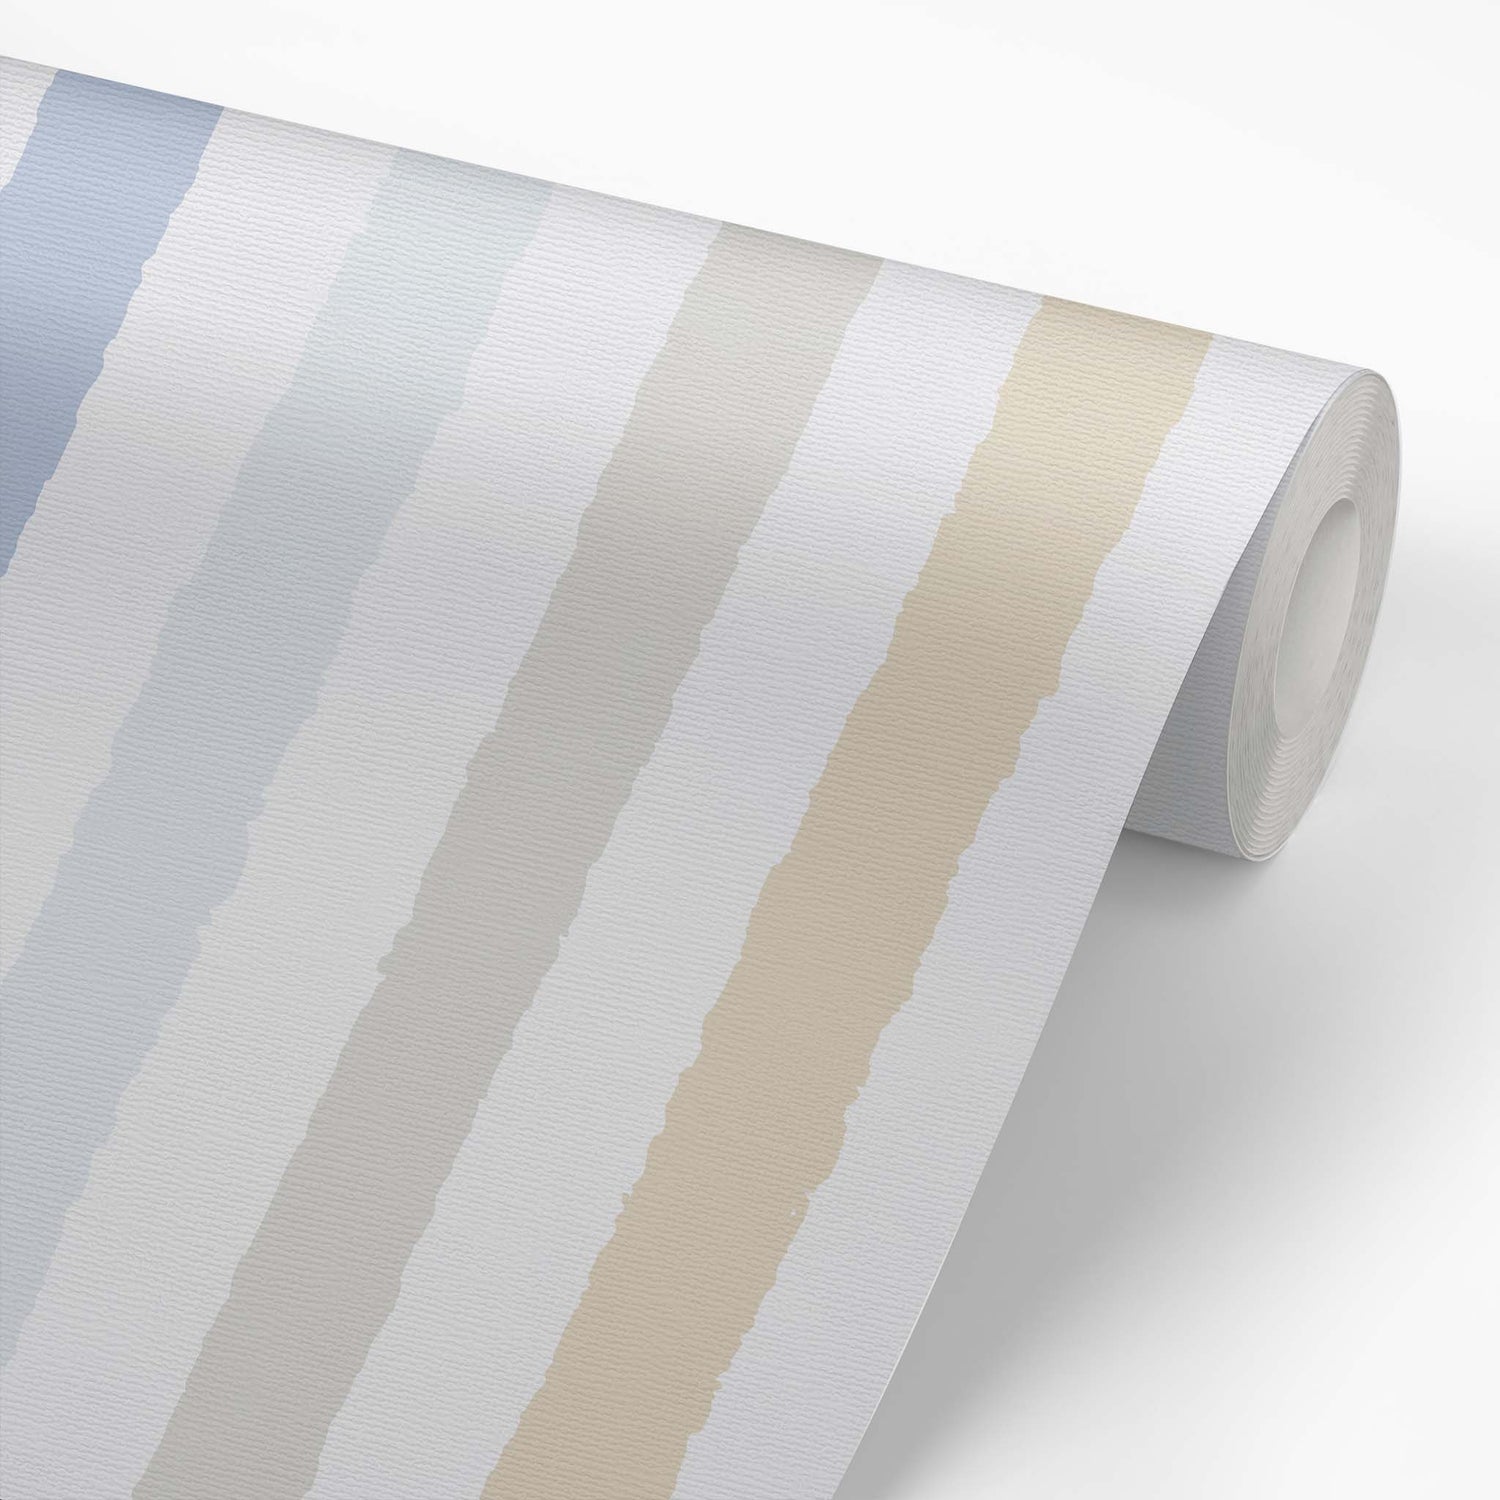 Wallpaper panel featuring Iris + Sea Bold Stripe- Blue - a striped pattern